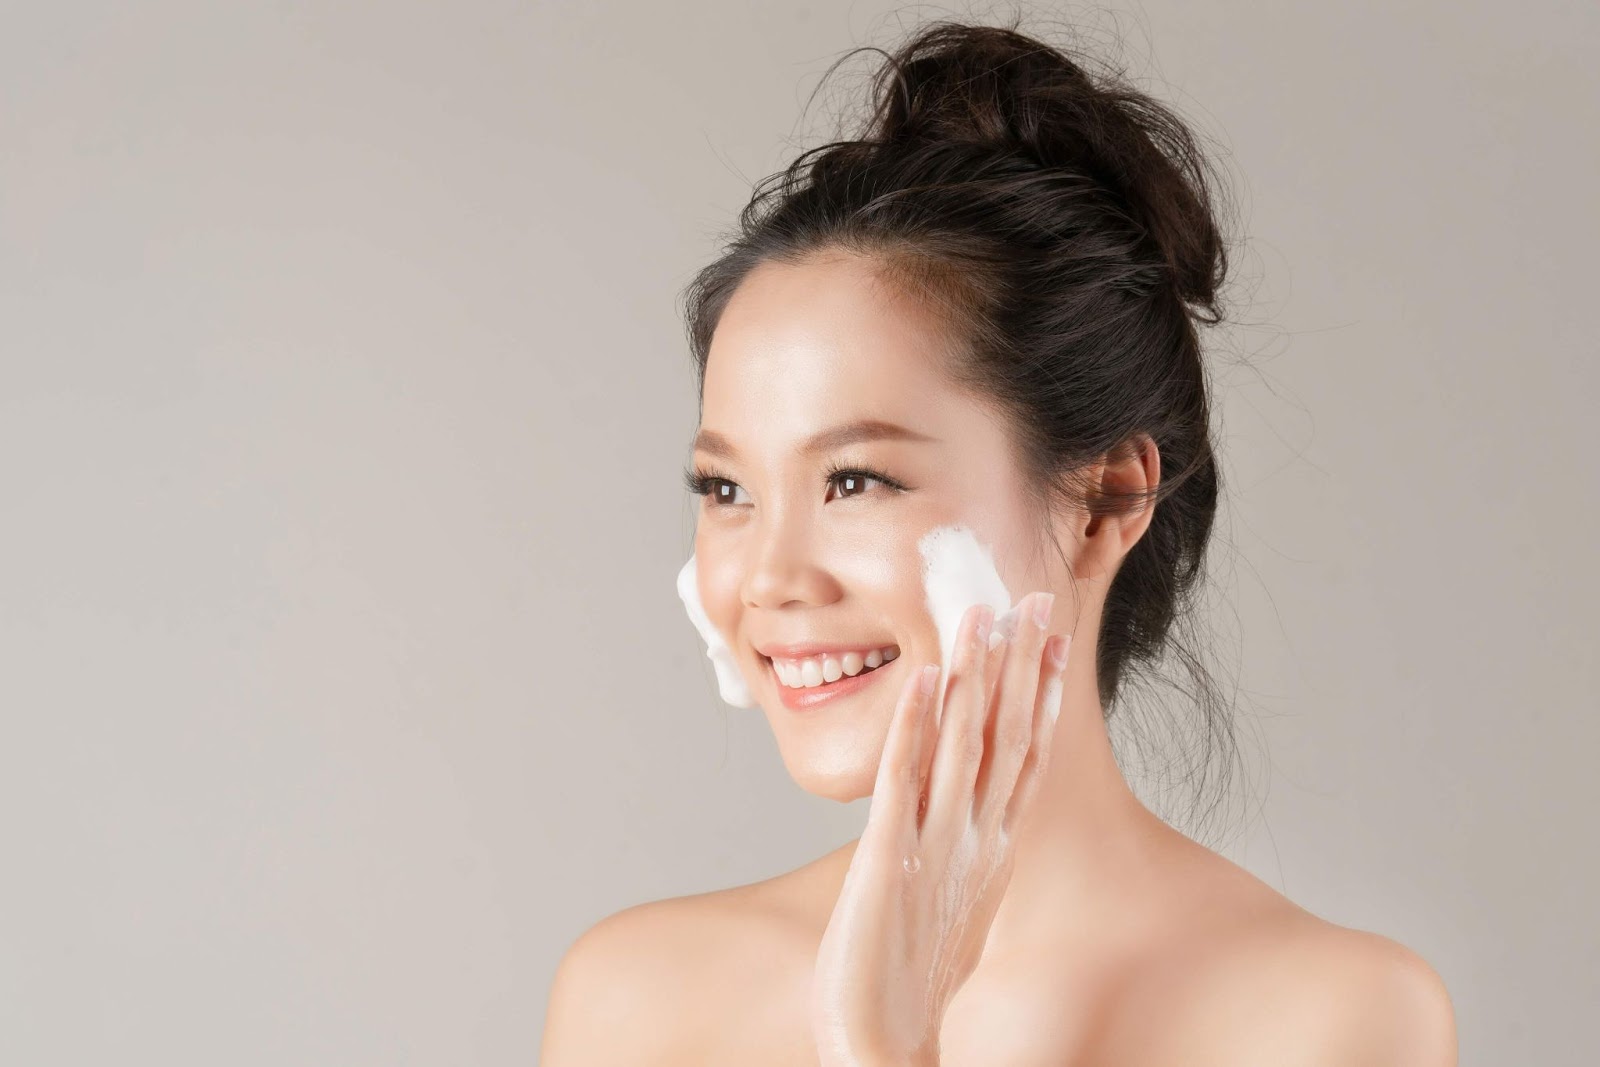 5 Benefits of TCM for Sensitive, Acne-Prone Skin